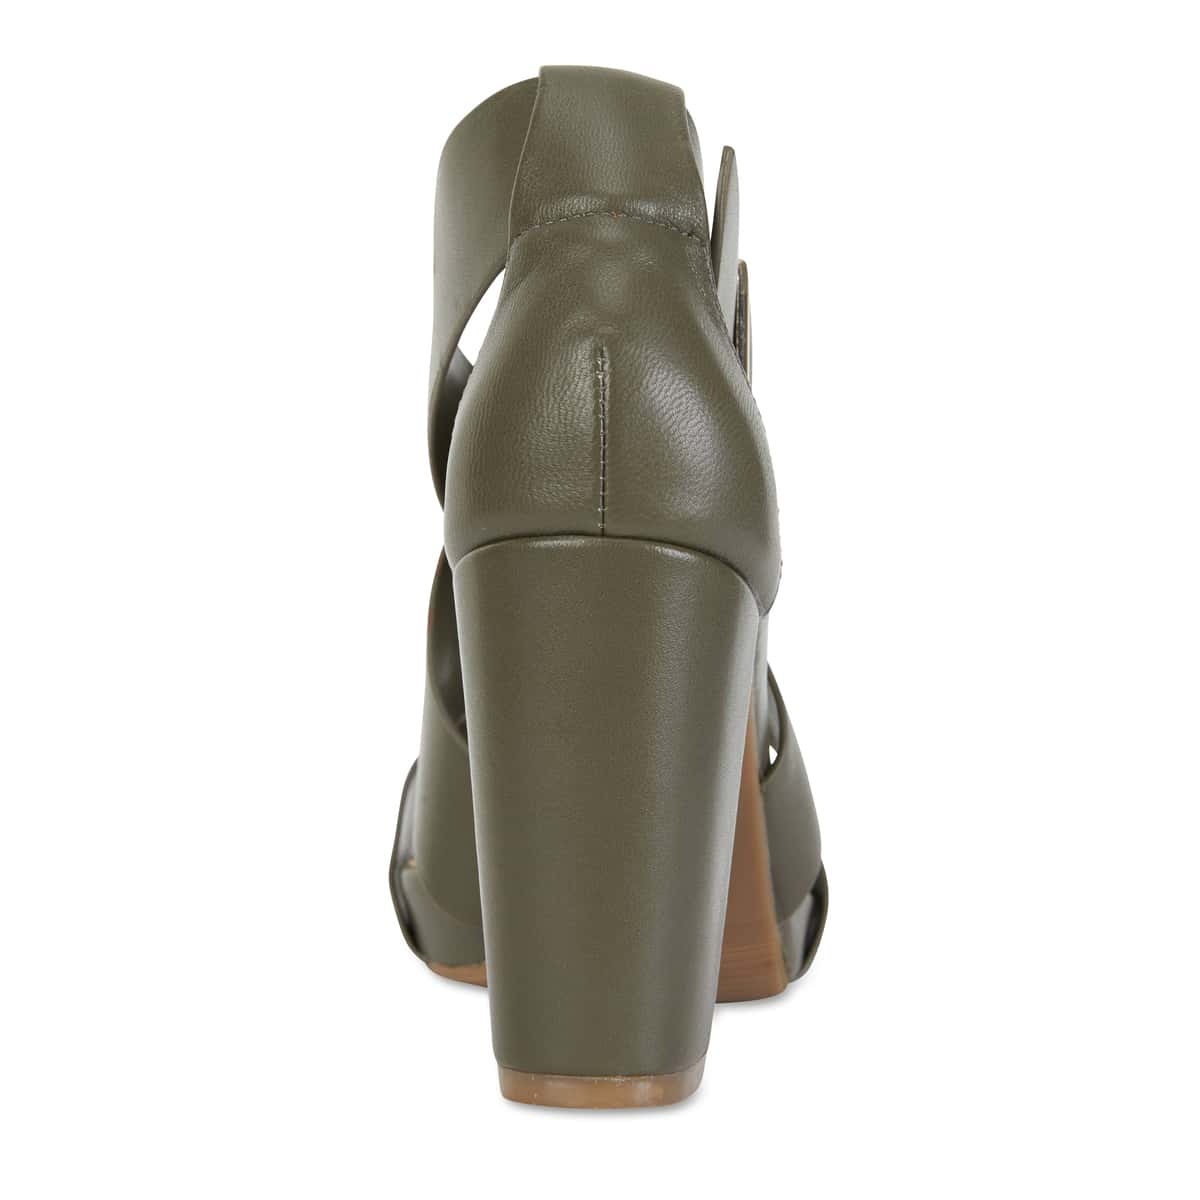 Congo Heel in Khaki Leather